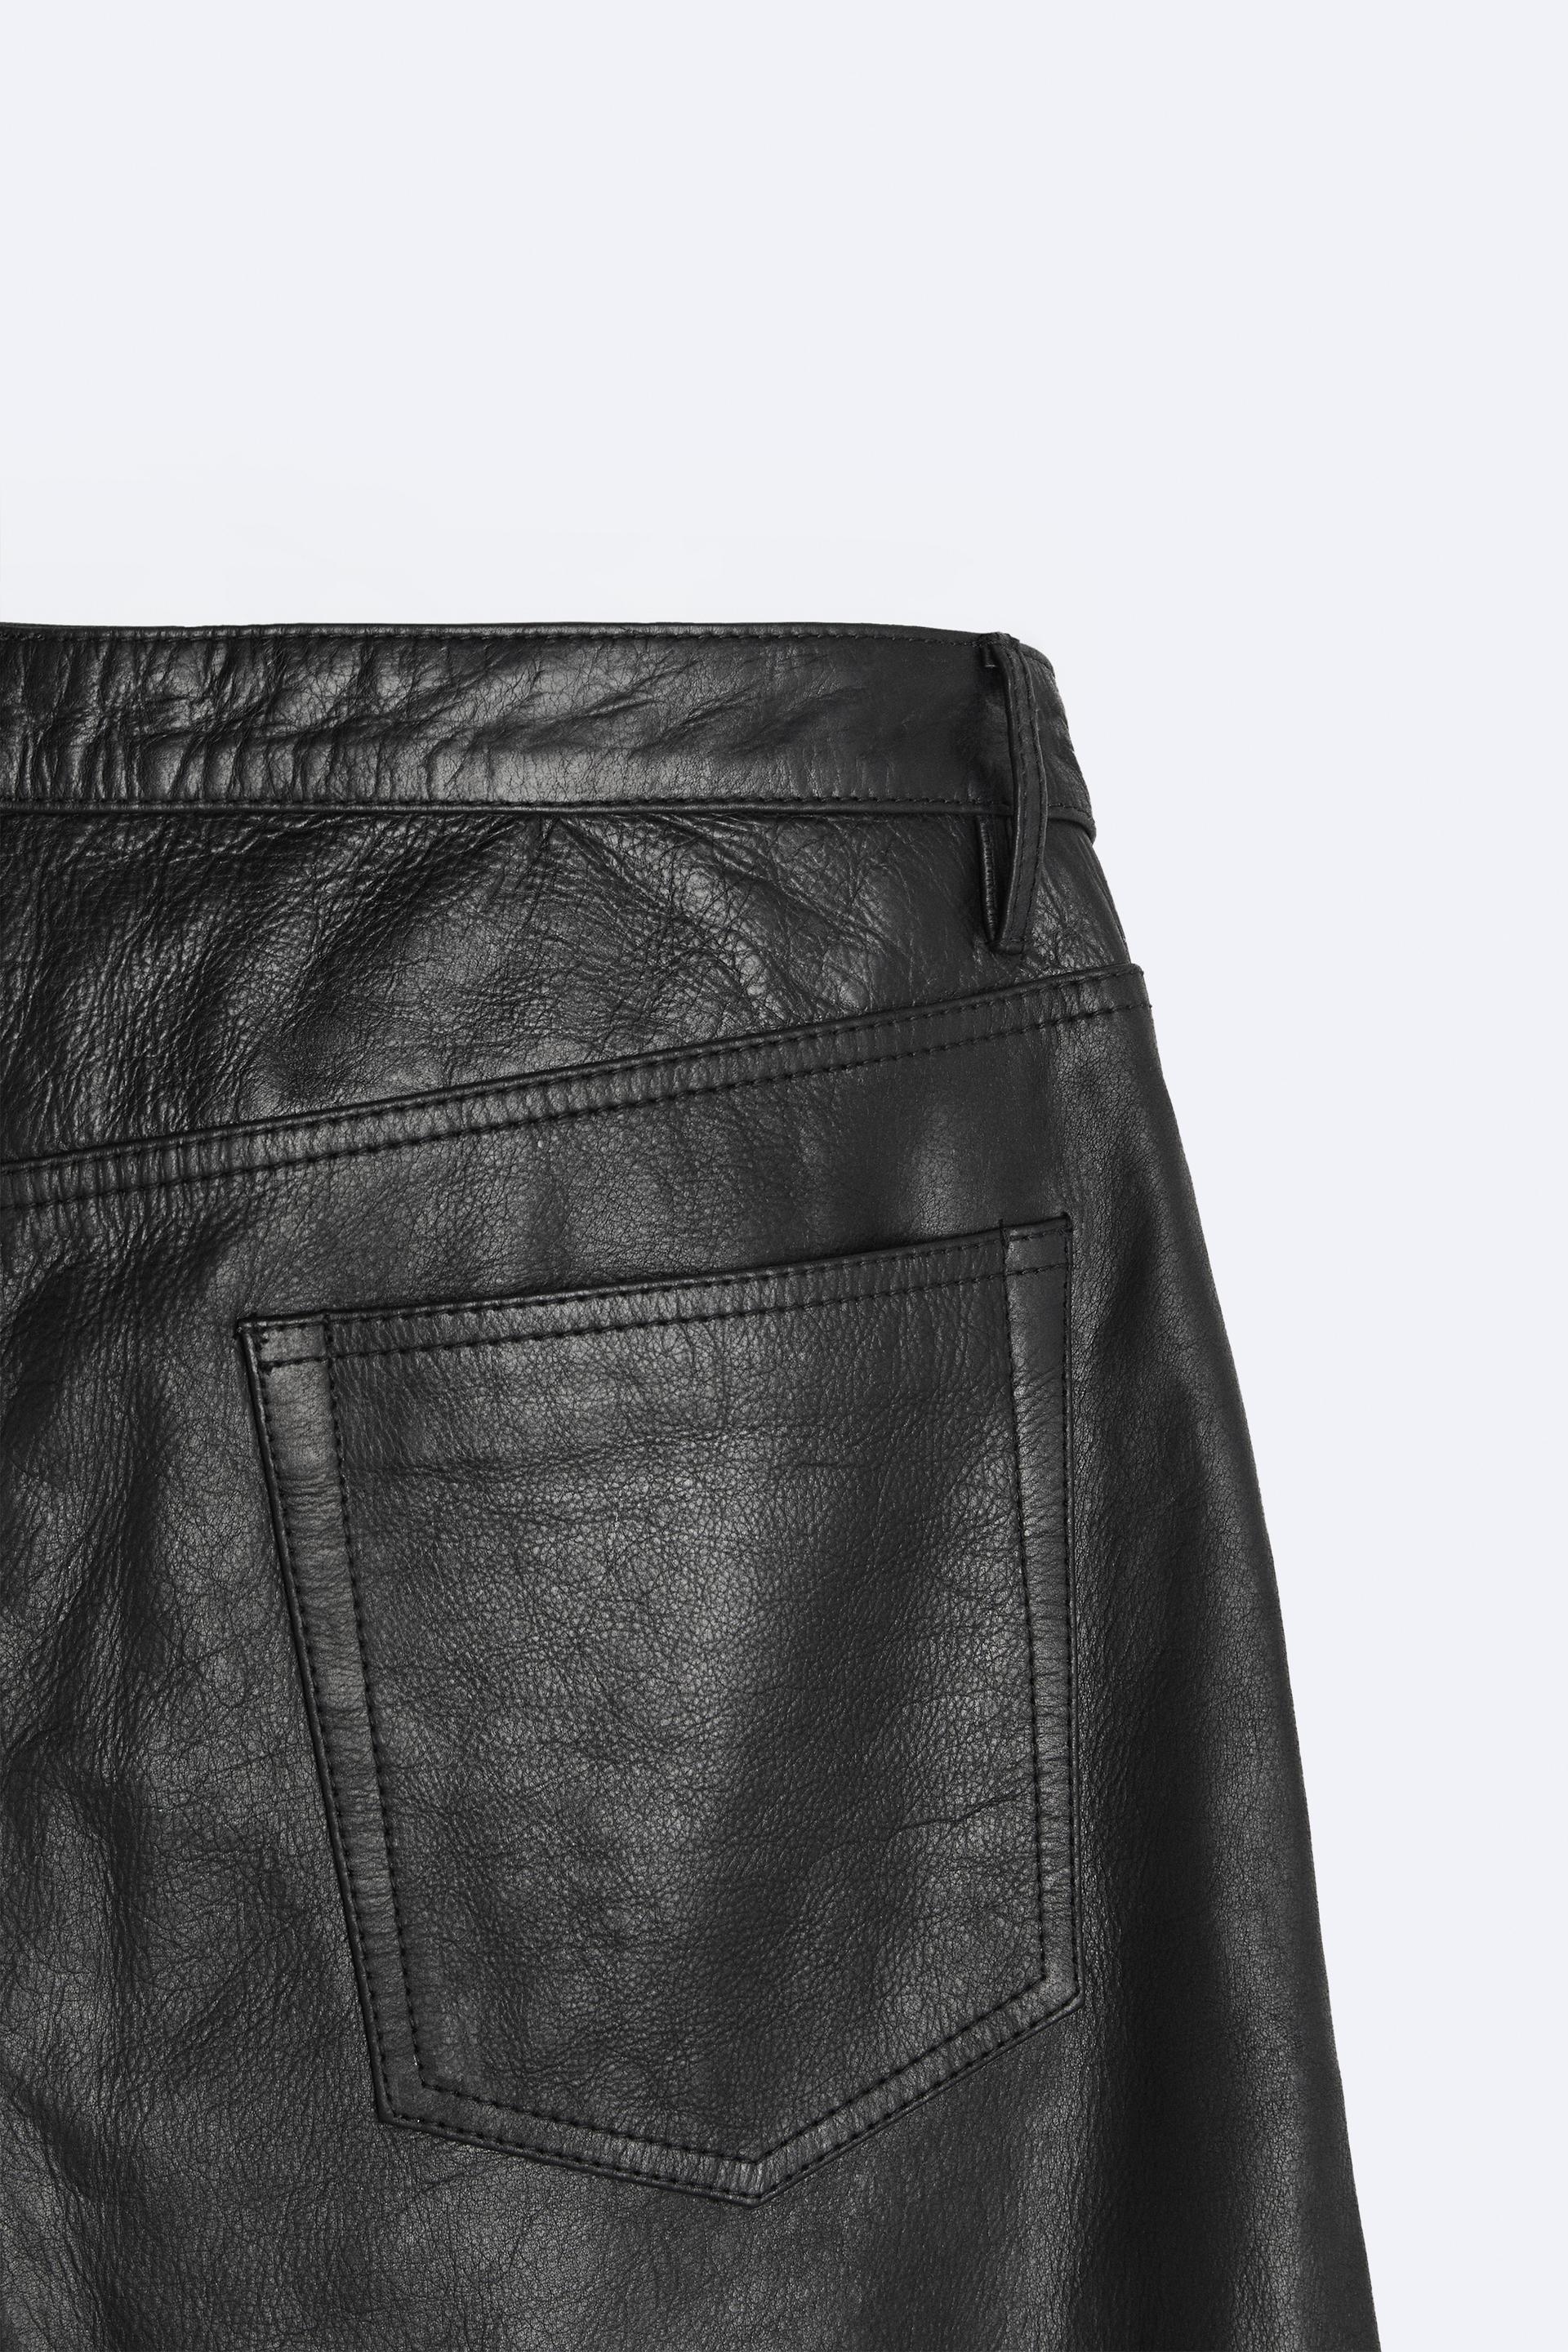 Zara Leather Pants -  Canada